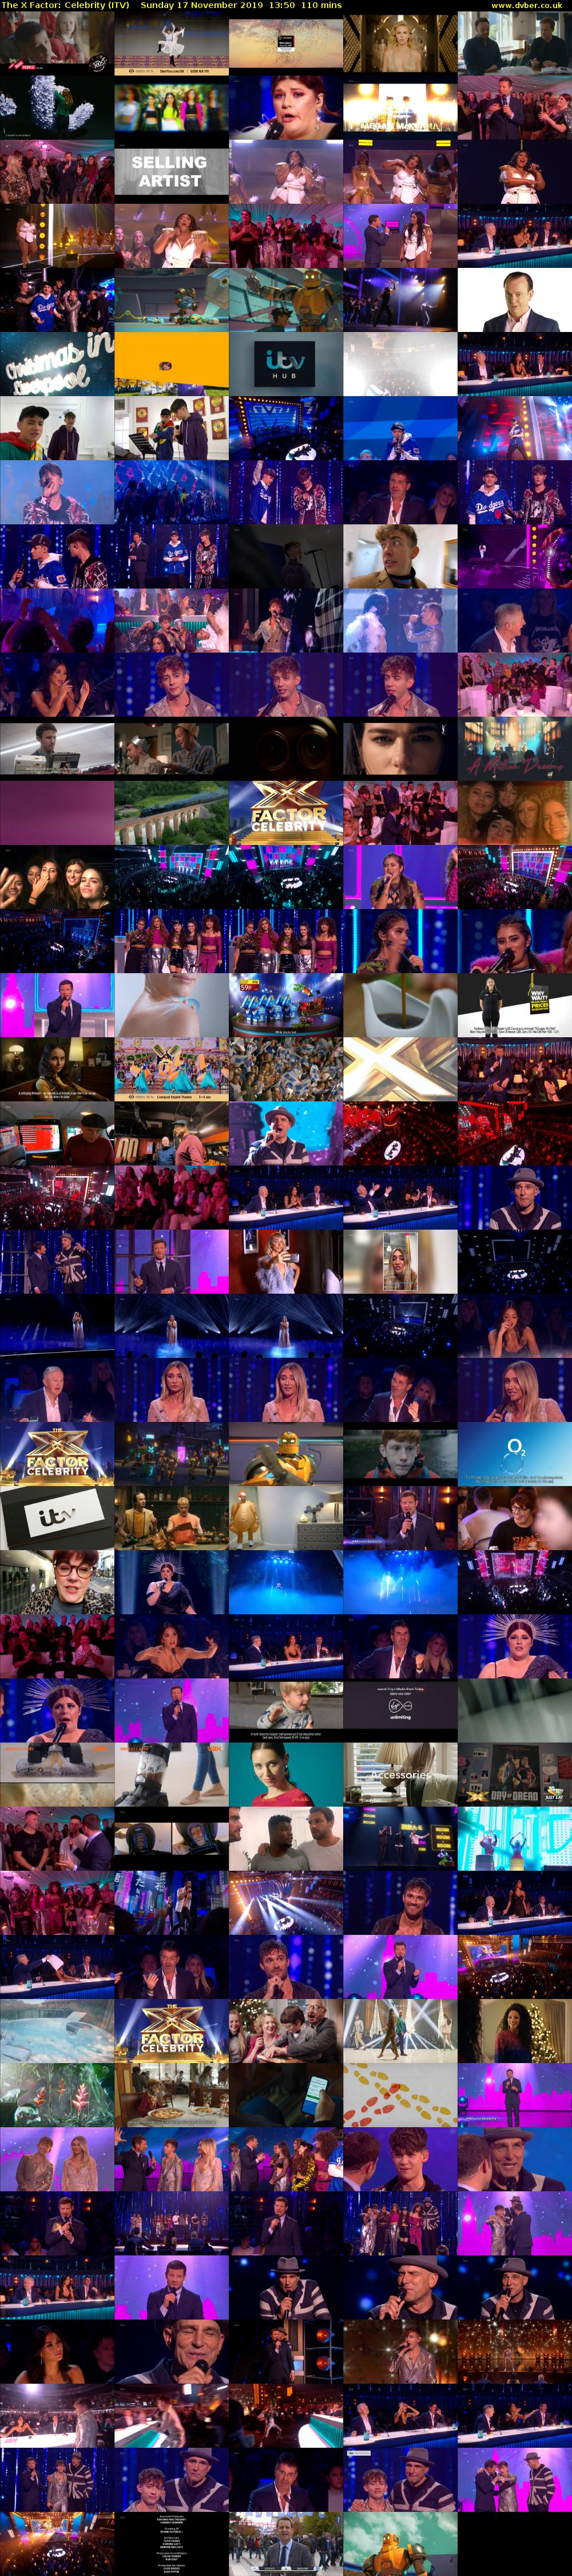 The X Factor: Celebrity (ITV) Sunday 17 November 2019 13:50 - 15:40